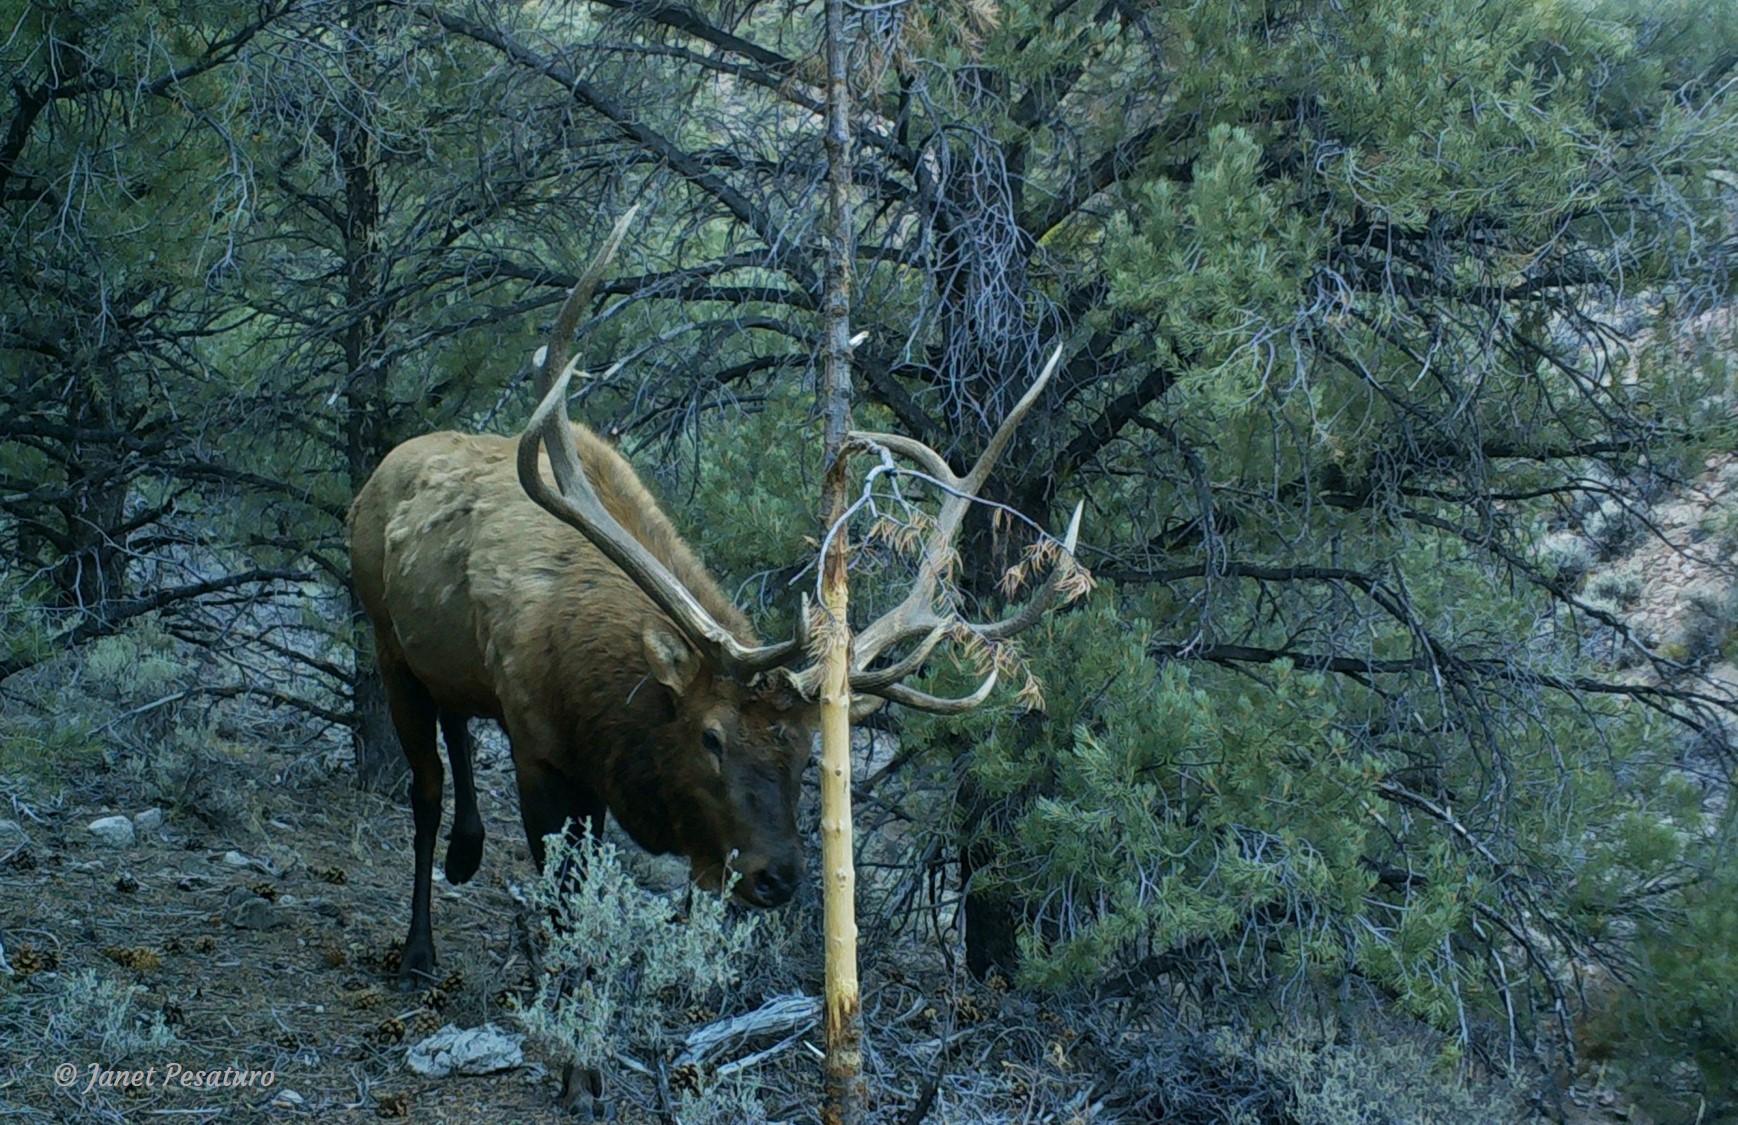 A bull elk approaching a conifer sapling that he uses as an antler rub.